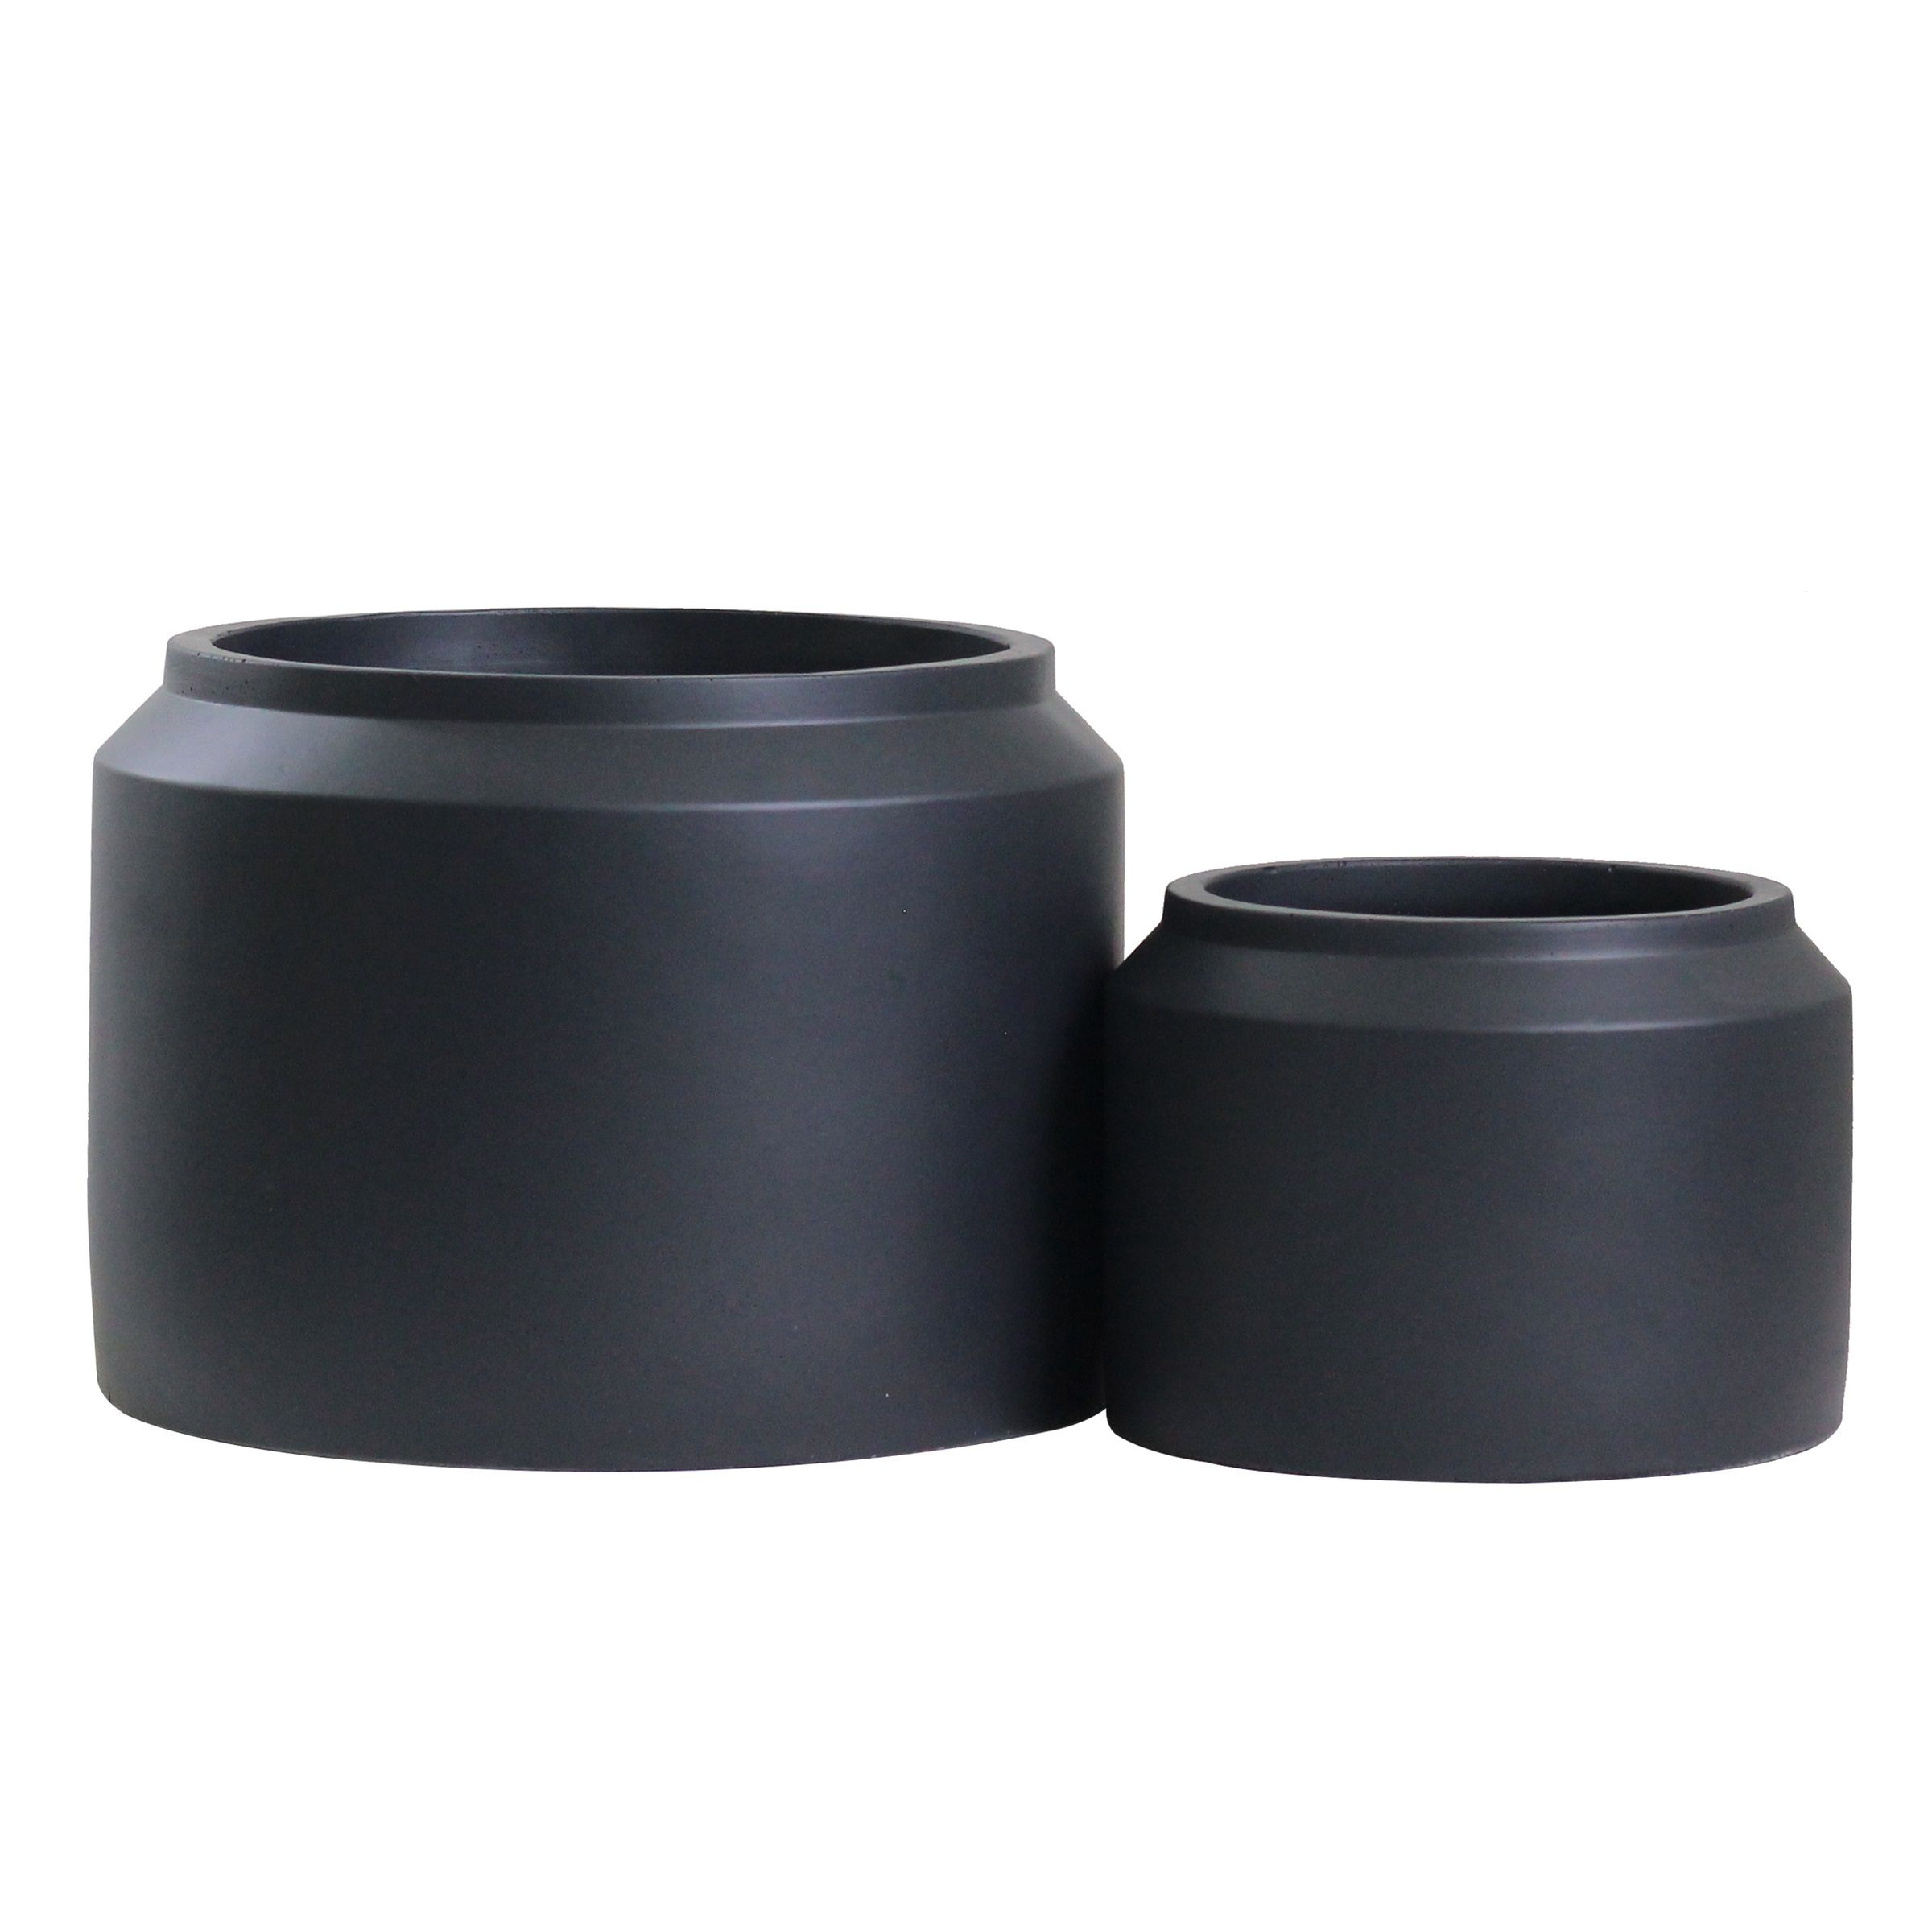 Olly & RosePorto Plant Pots - Matt Black Ceramic Jar Design Plant Pots Indoor & Outdoor Set 2 Pla... | Walmart (US)